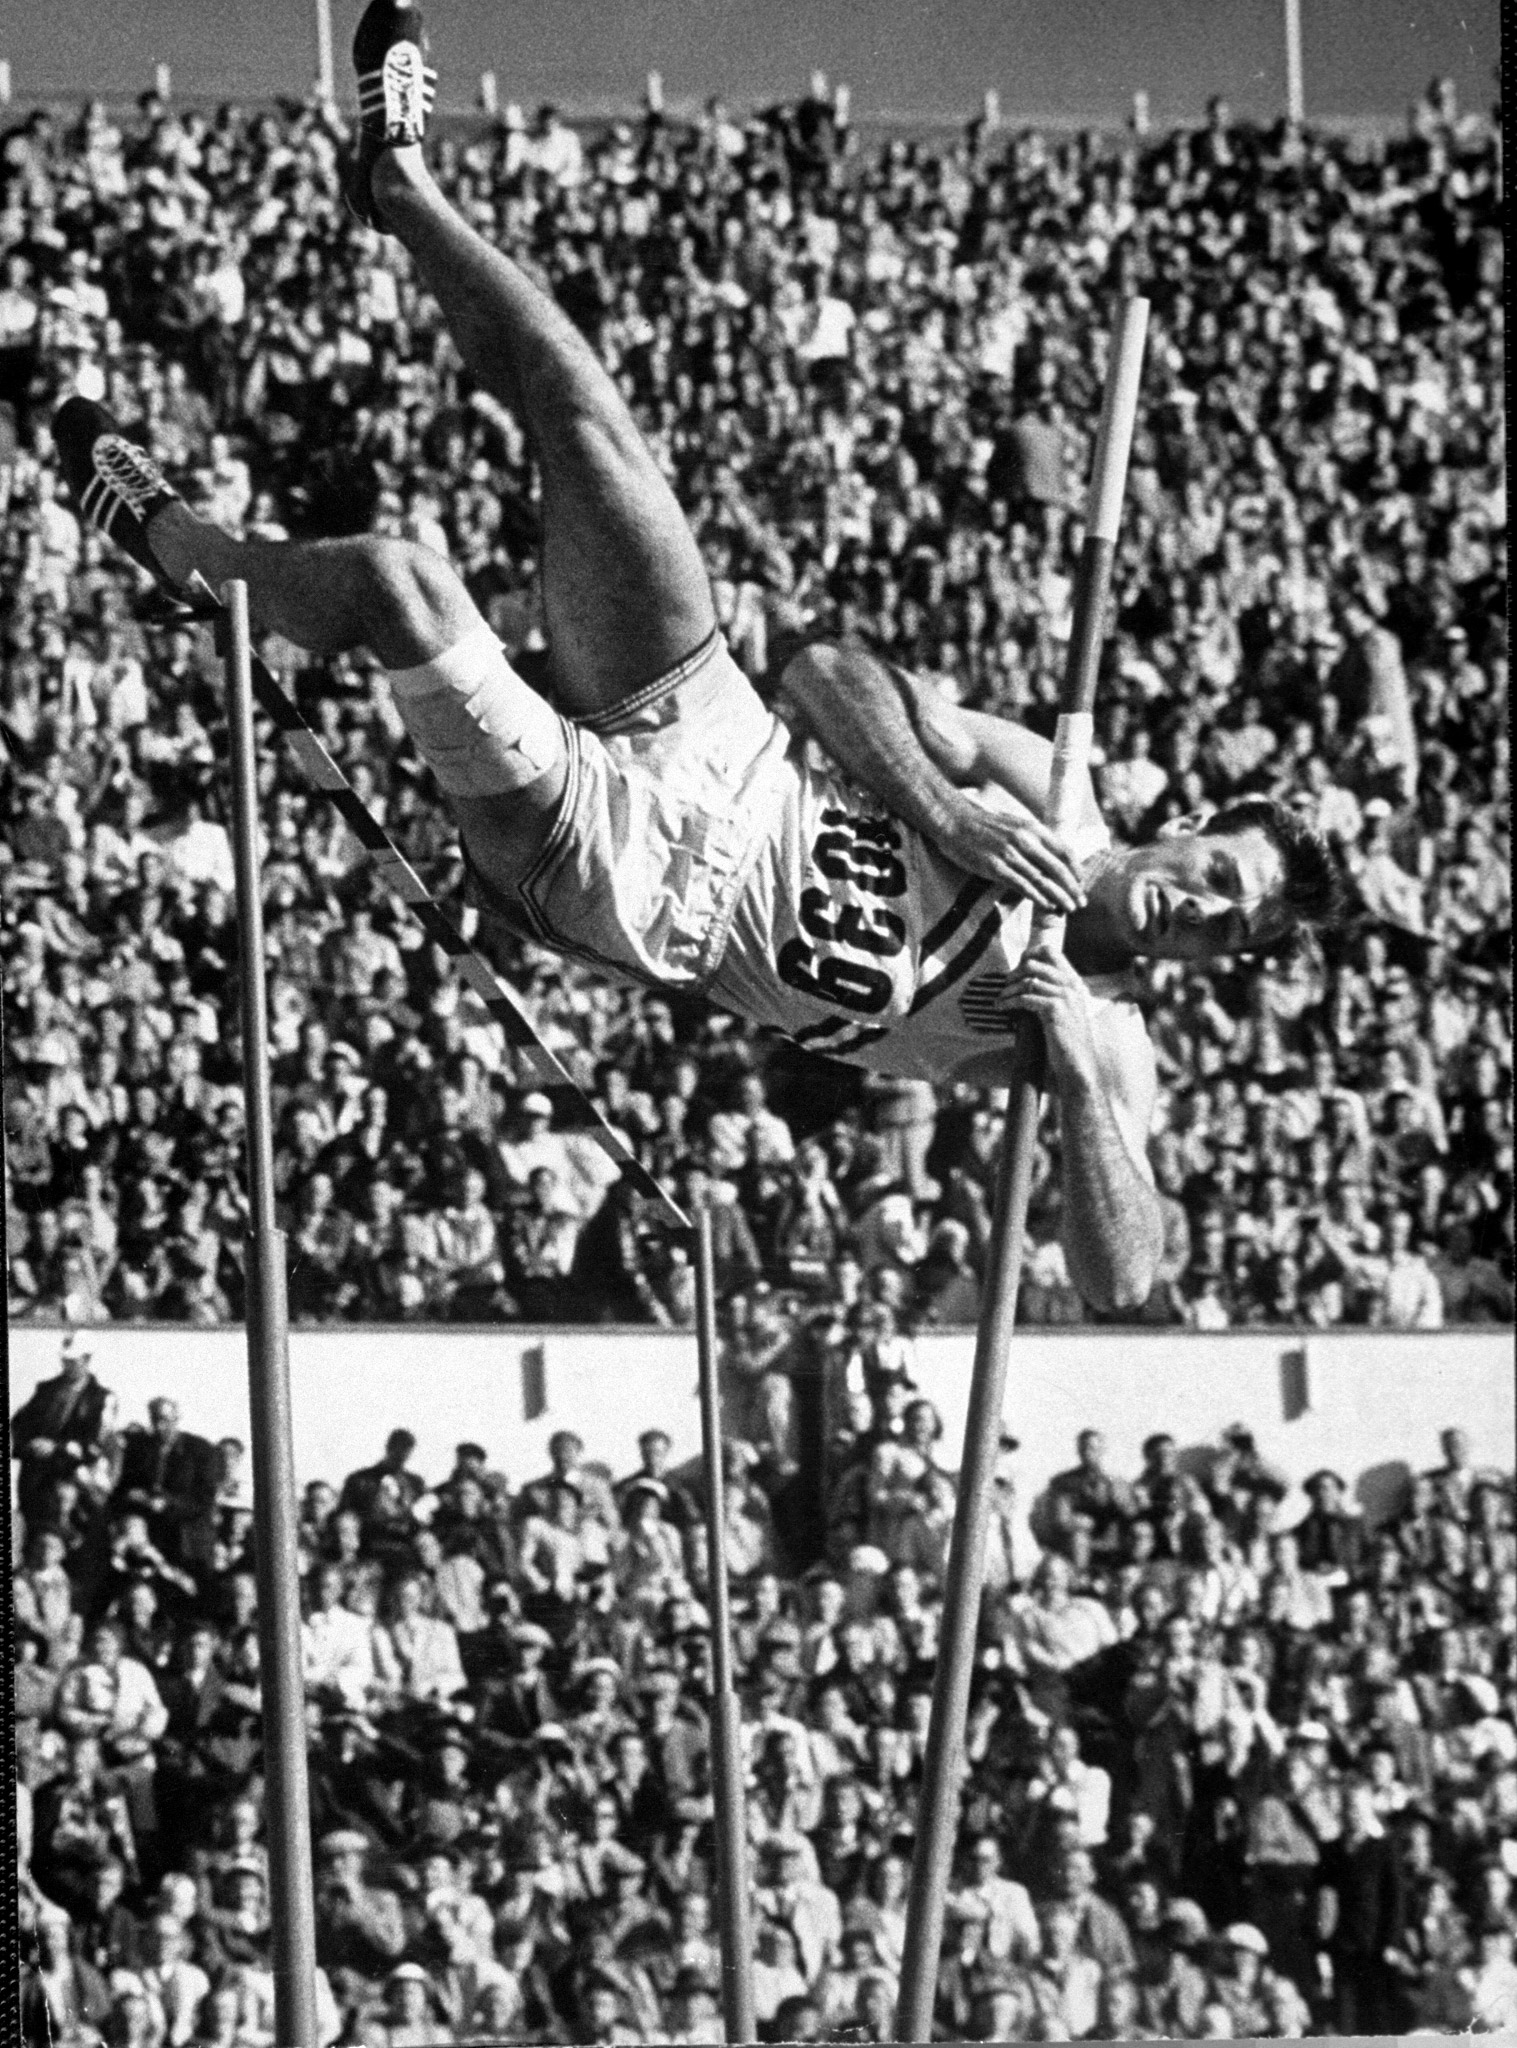 Robert B. Mathias attempting the pole vault at 1952 summer Olympics in Helsinki, Finland.